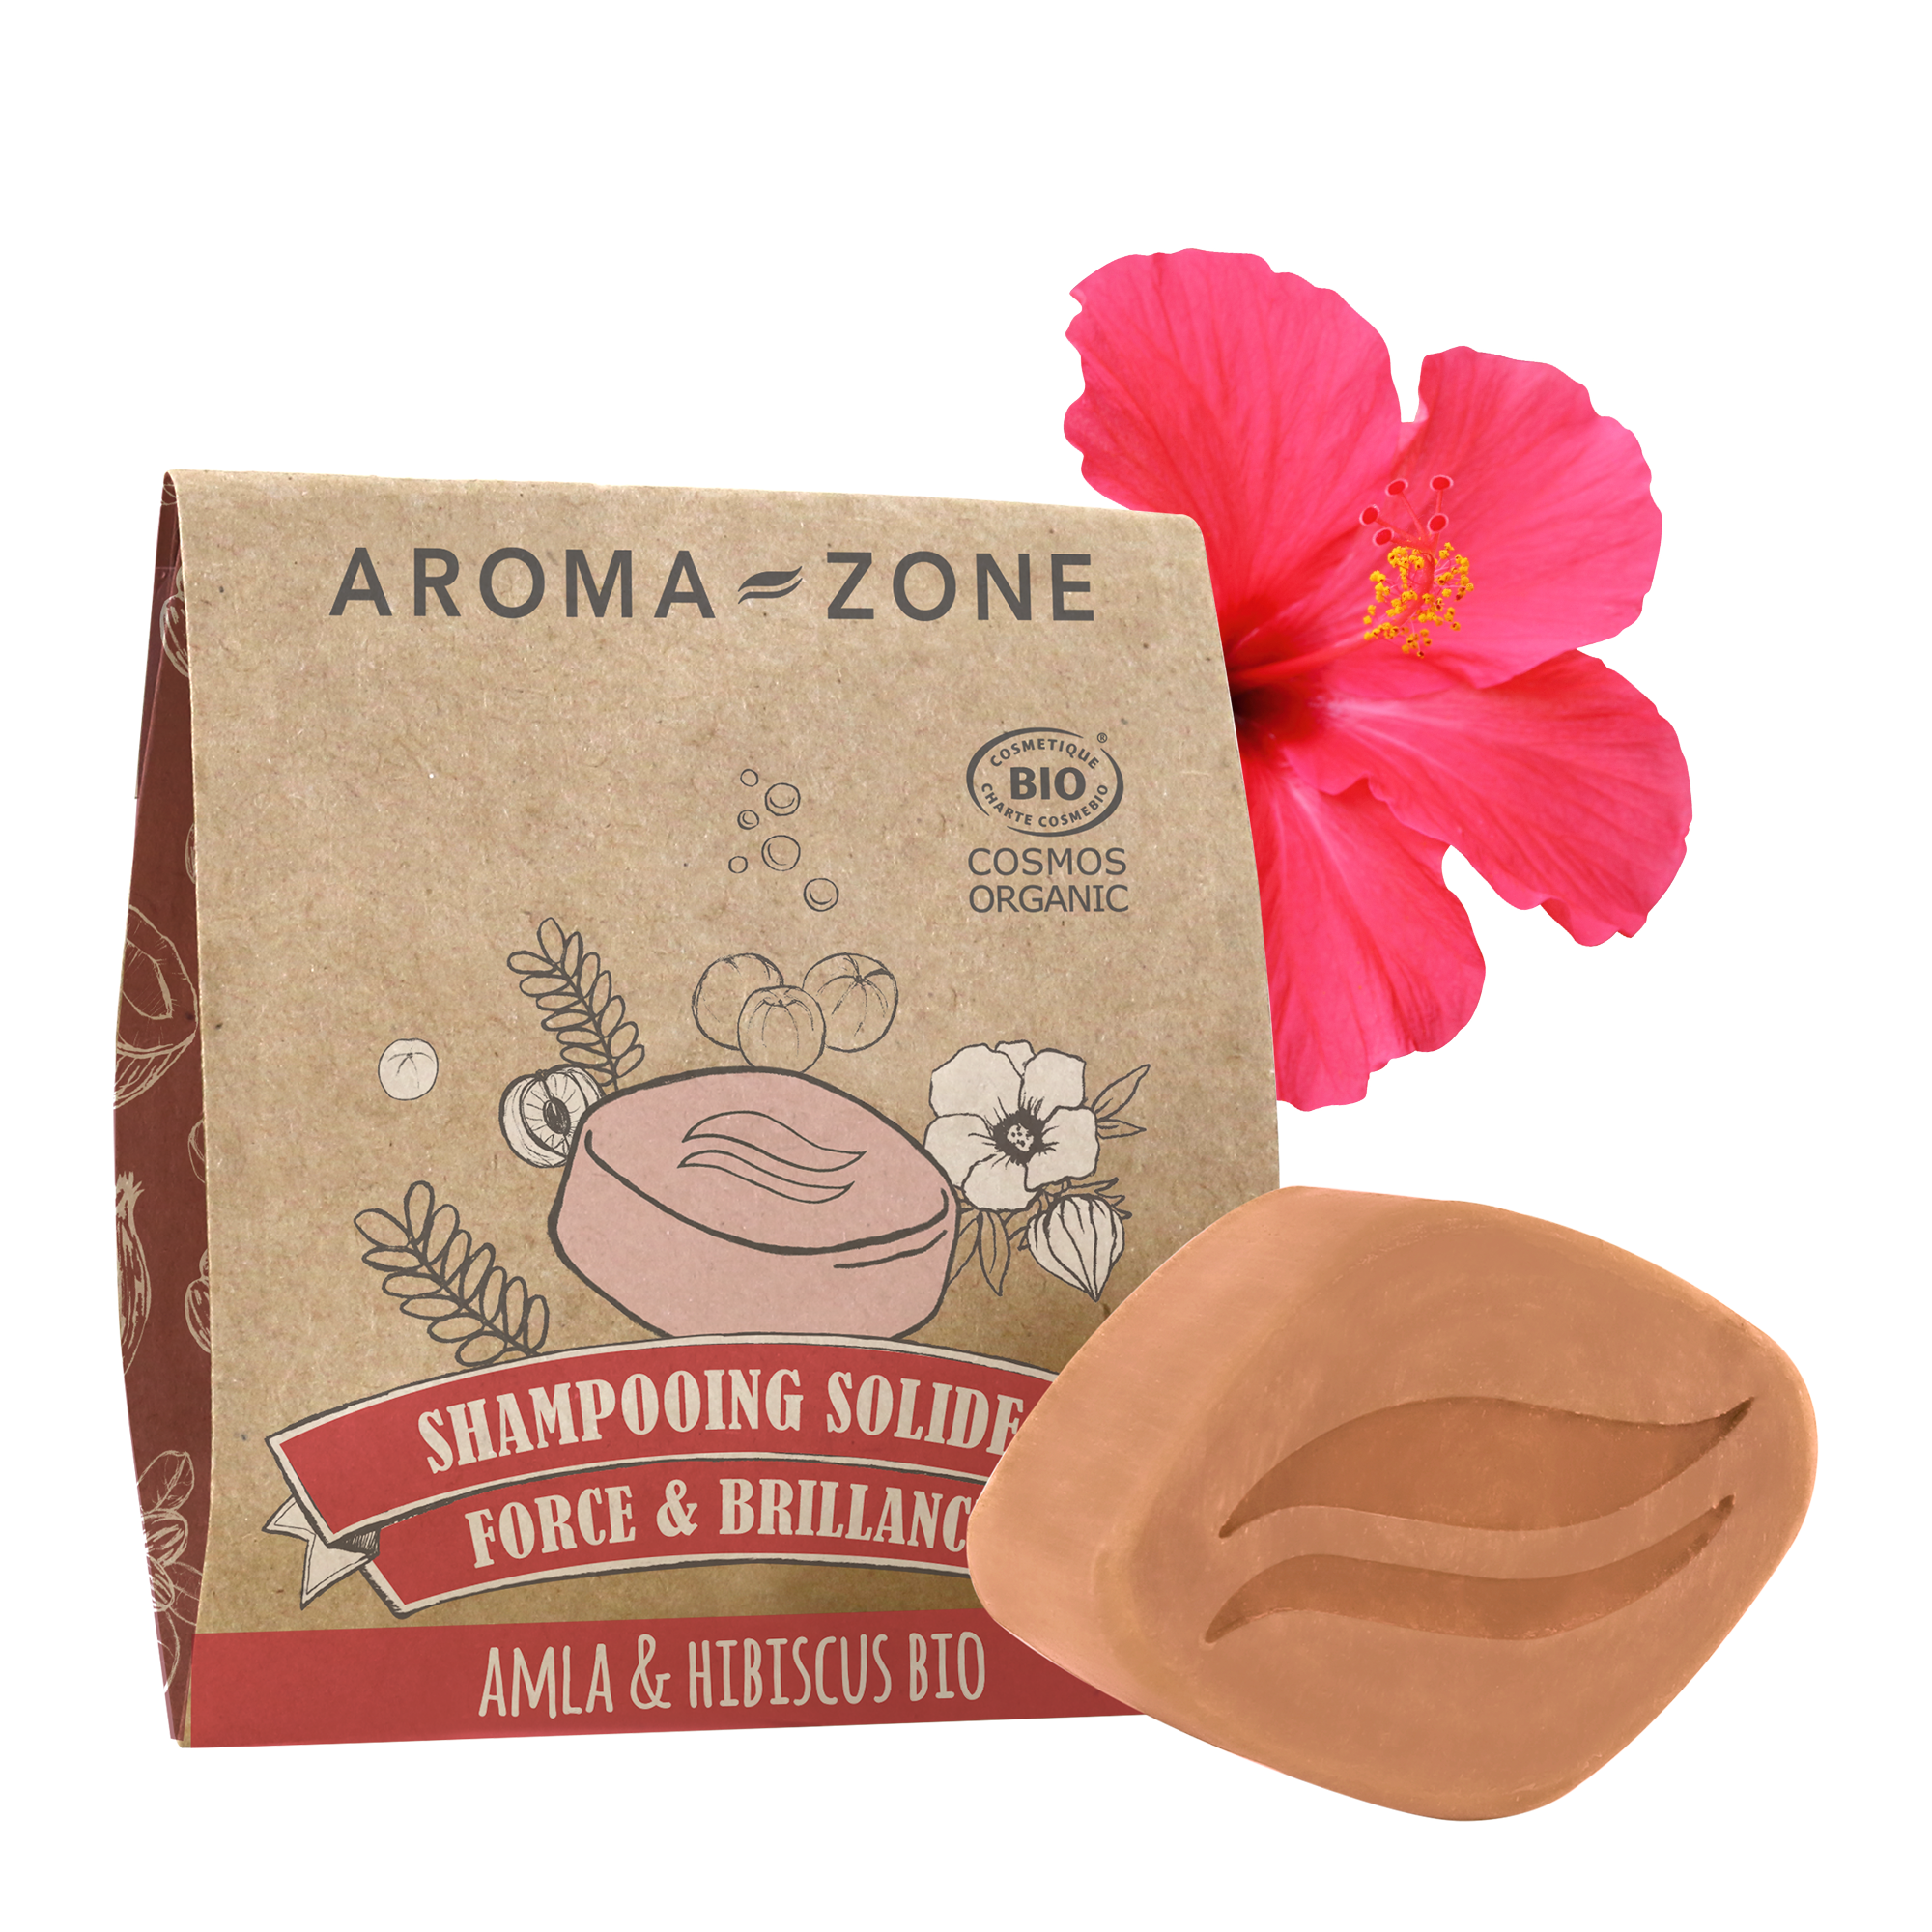 Composition AROMA-ZONE Base shampooing neutre bio - UFC-Que Choisir